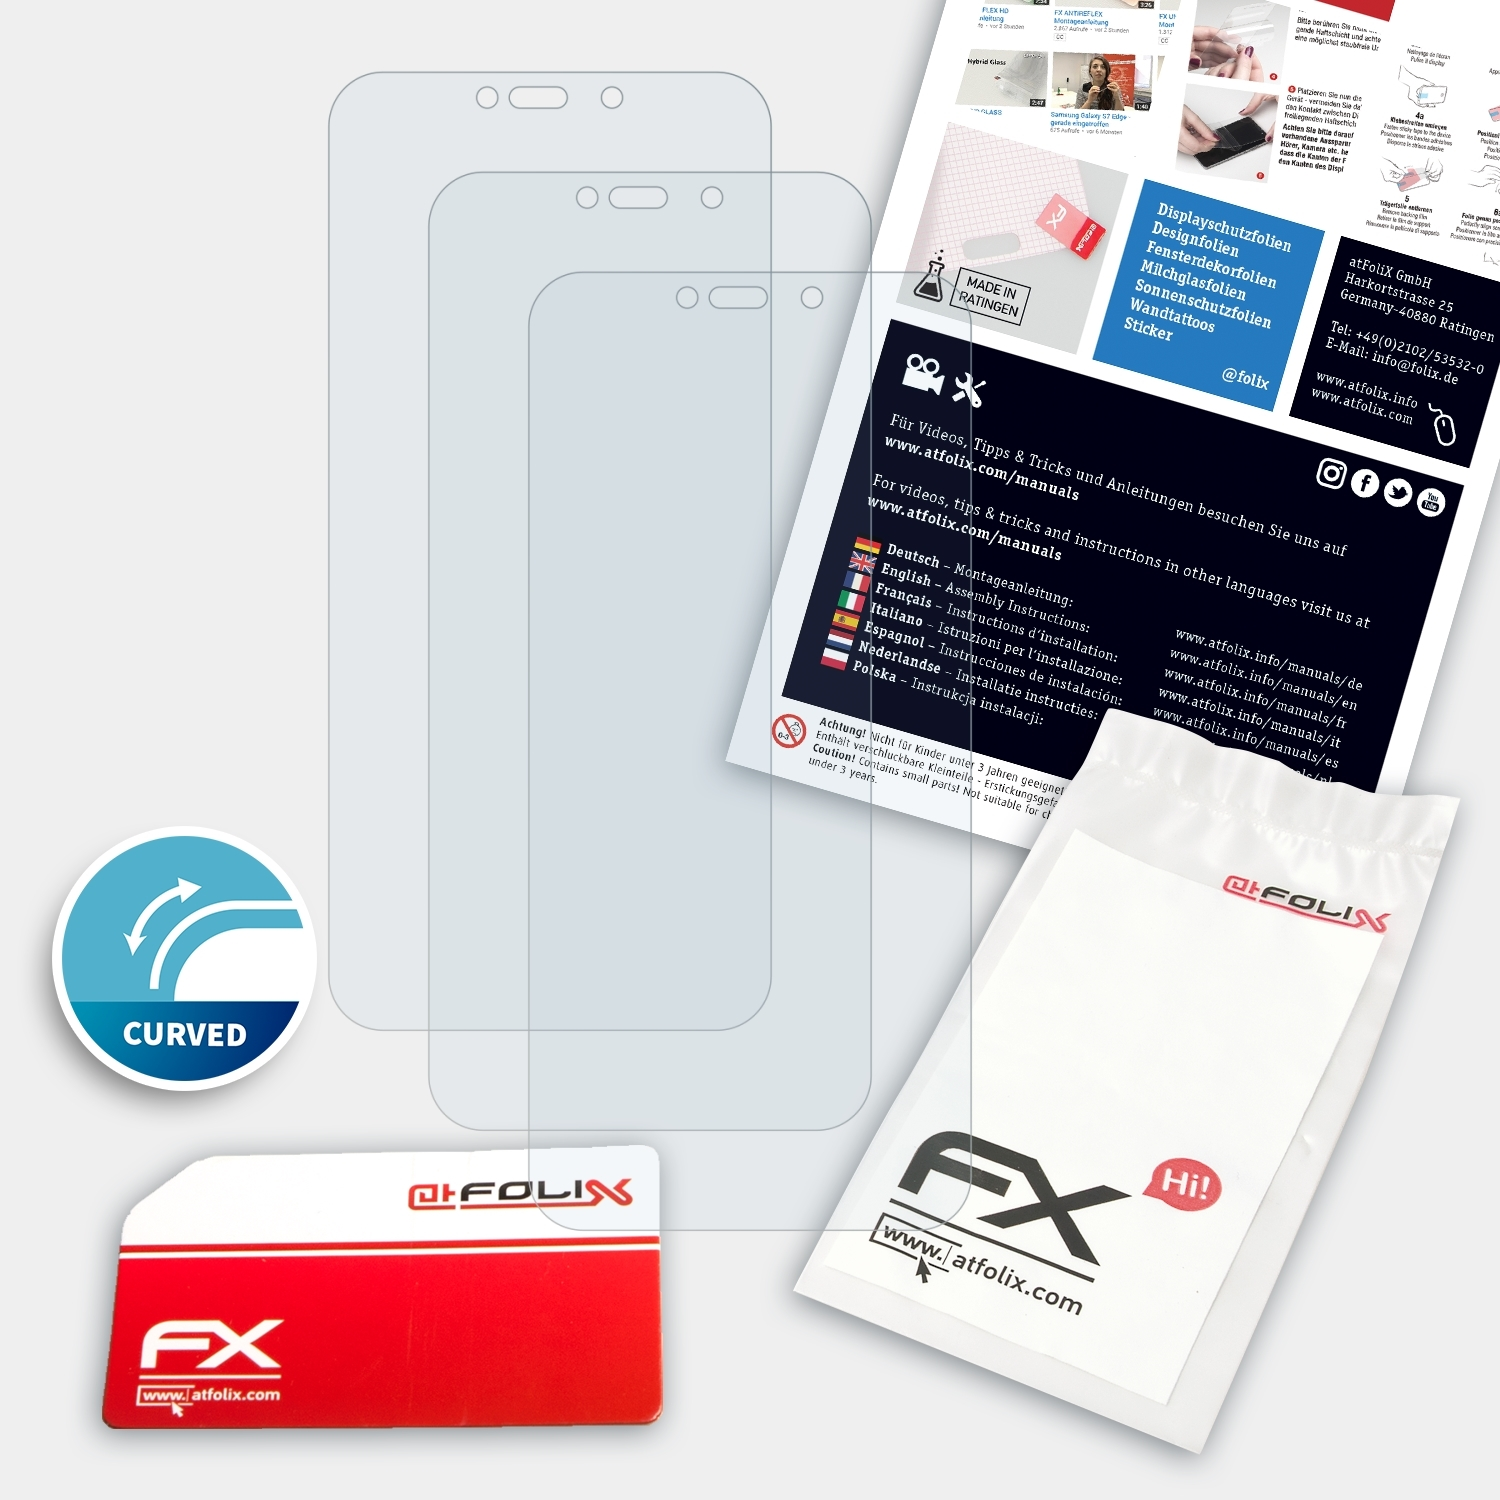 FX-ActiFleX ATFOLIX 3i) Displayschutz(für Nova 3x Huawei